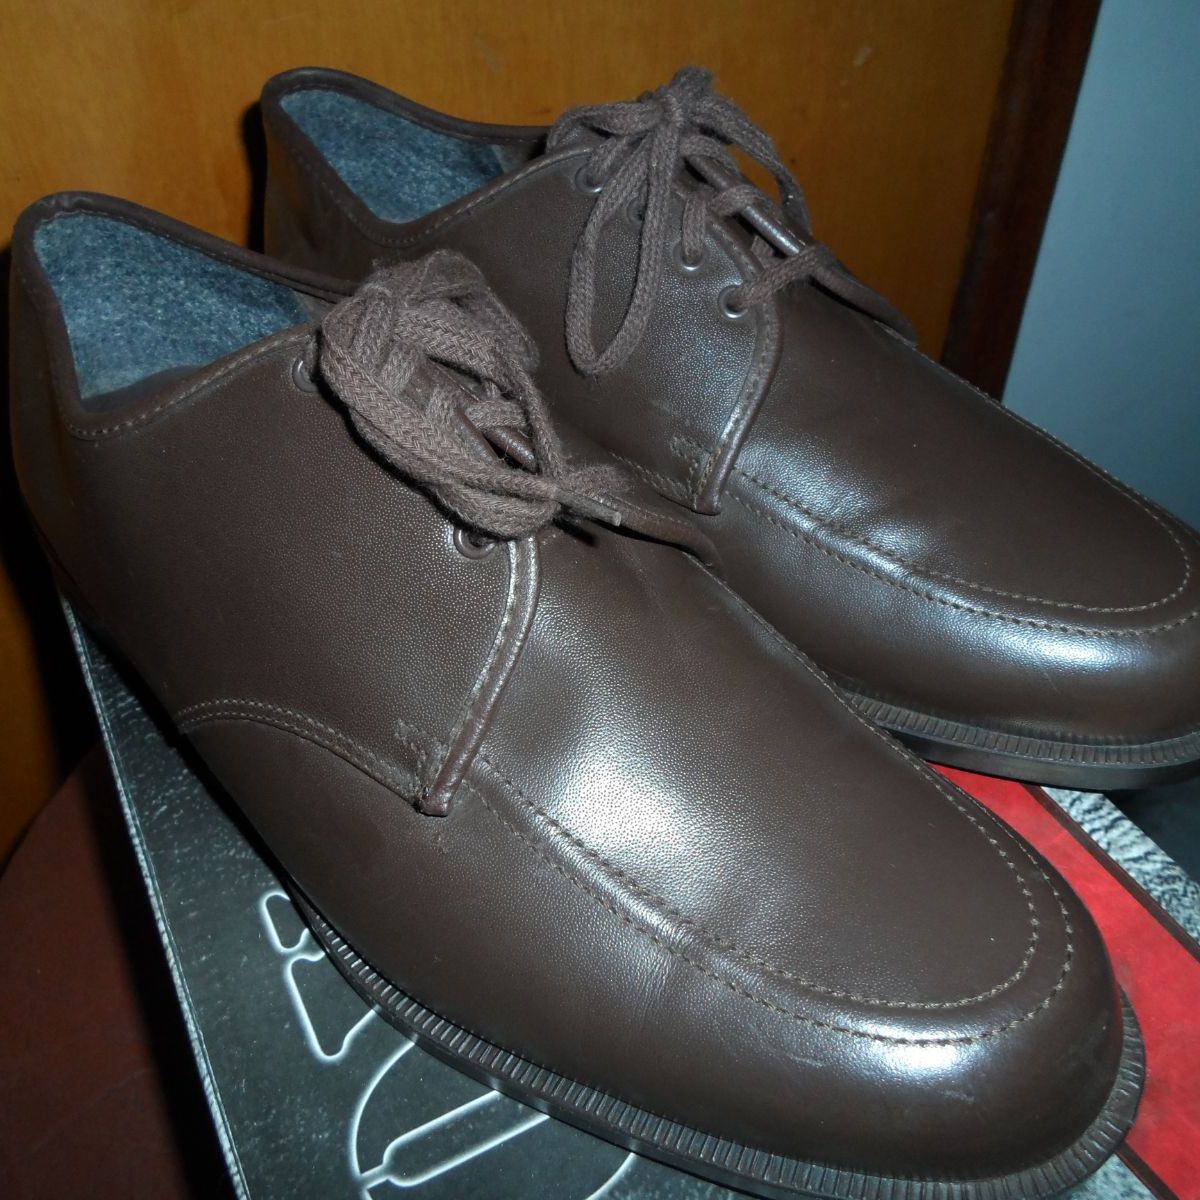 vulcabras sapatos masculinos